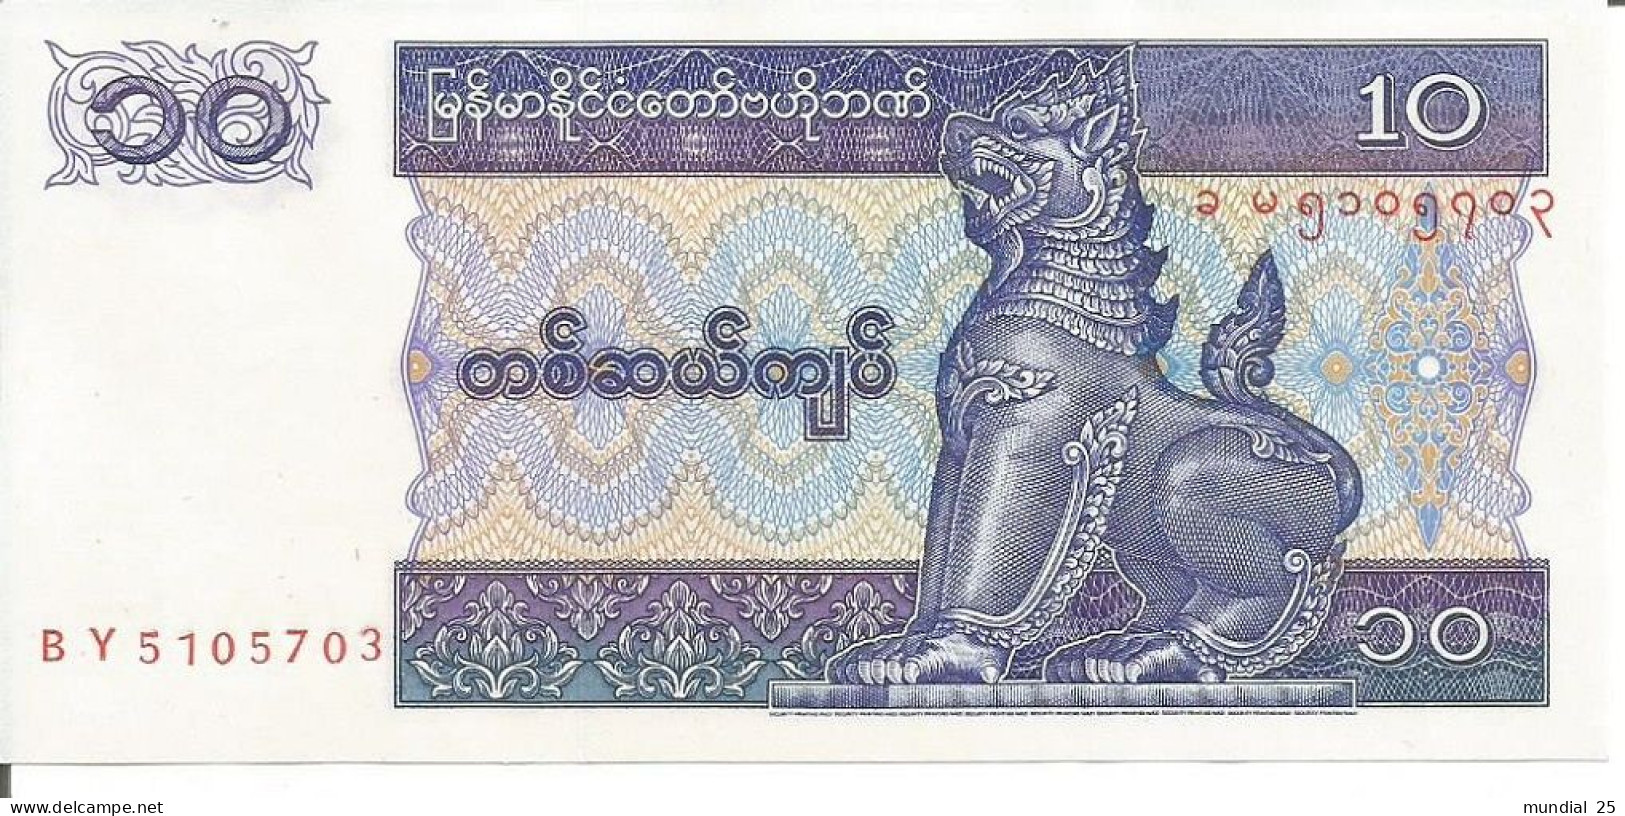 MYANMAR 10 KYATS N/D (1996) - Myanmar